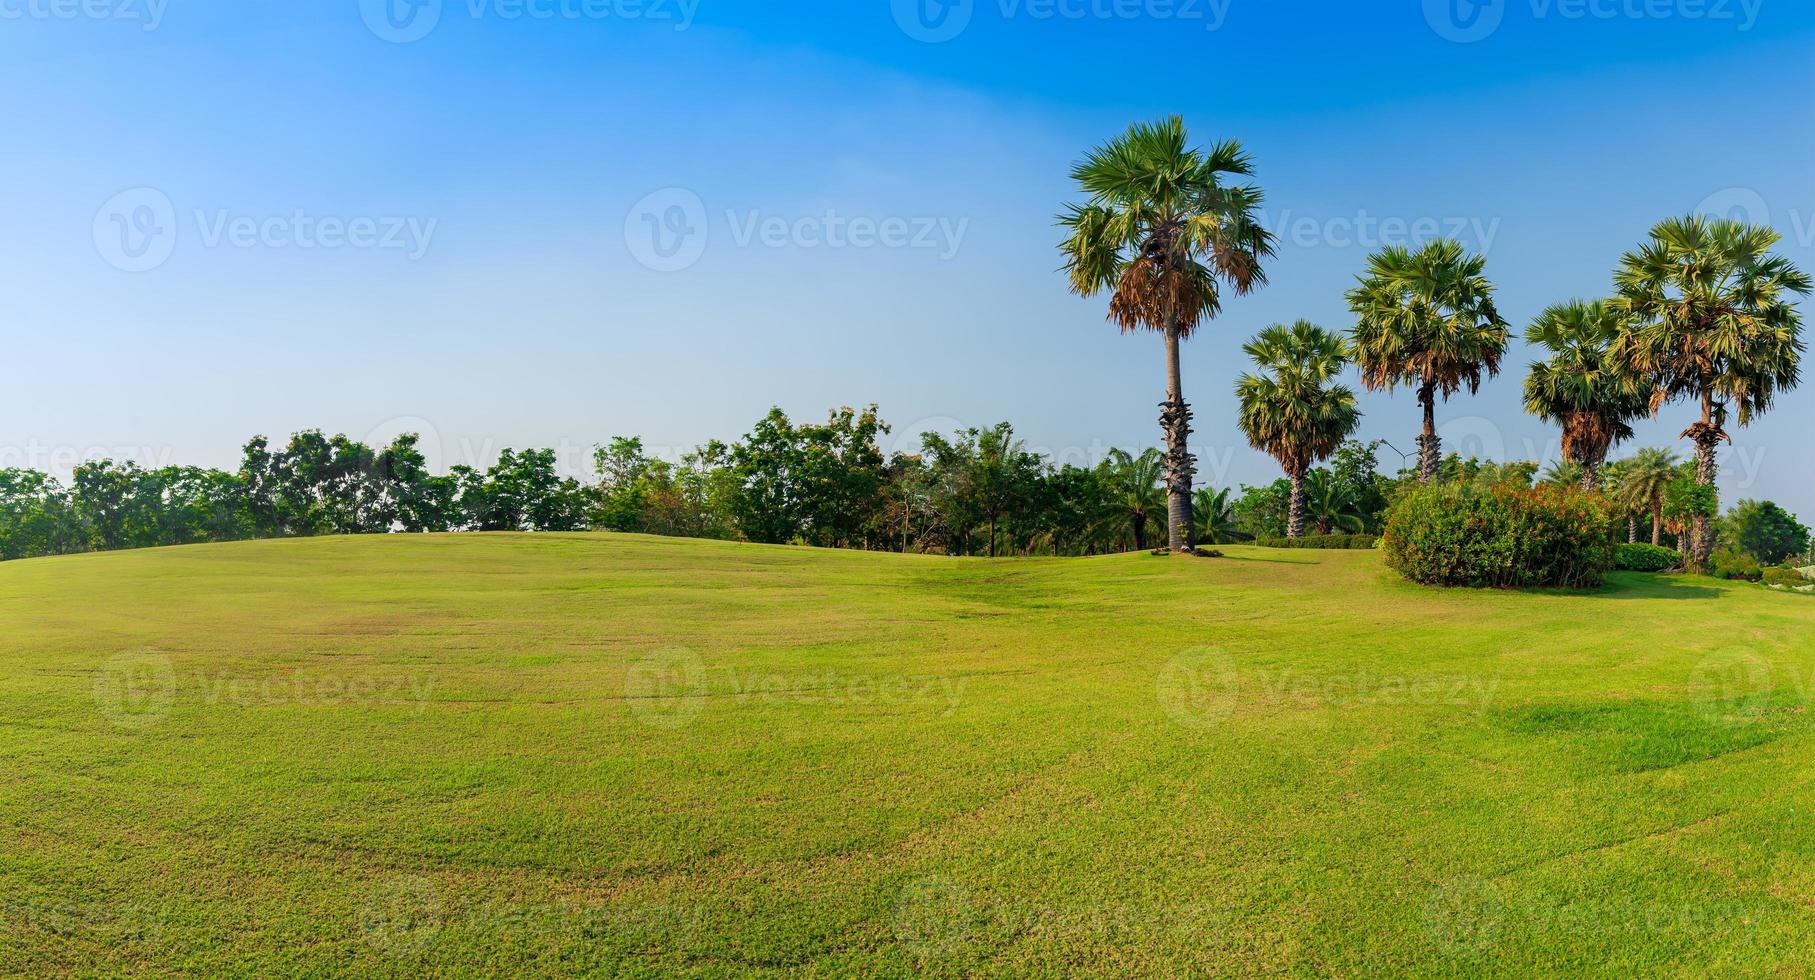 panorama grönt gräs på golffält med palmträd foto